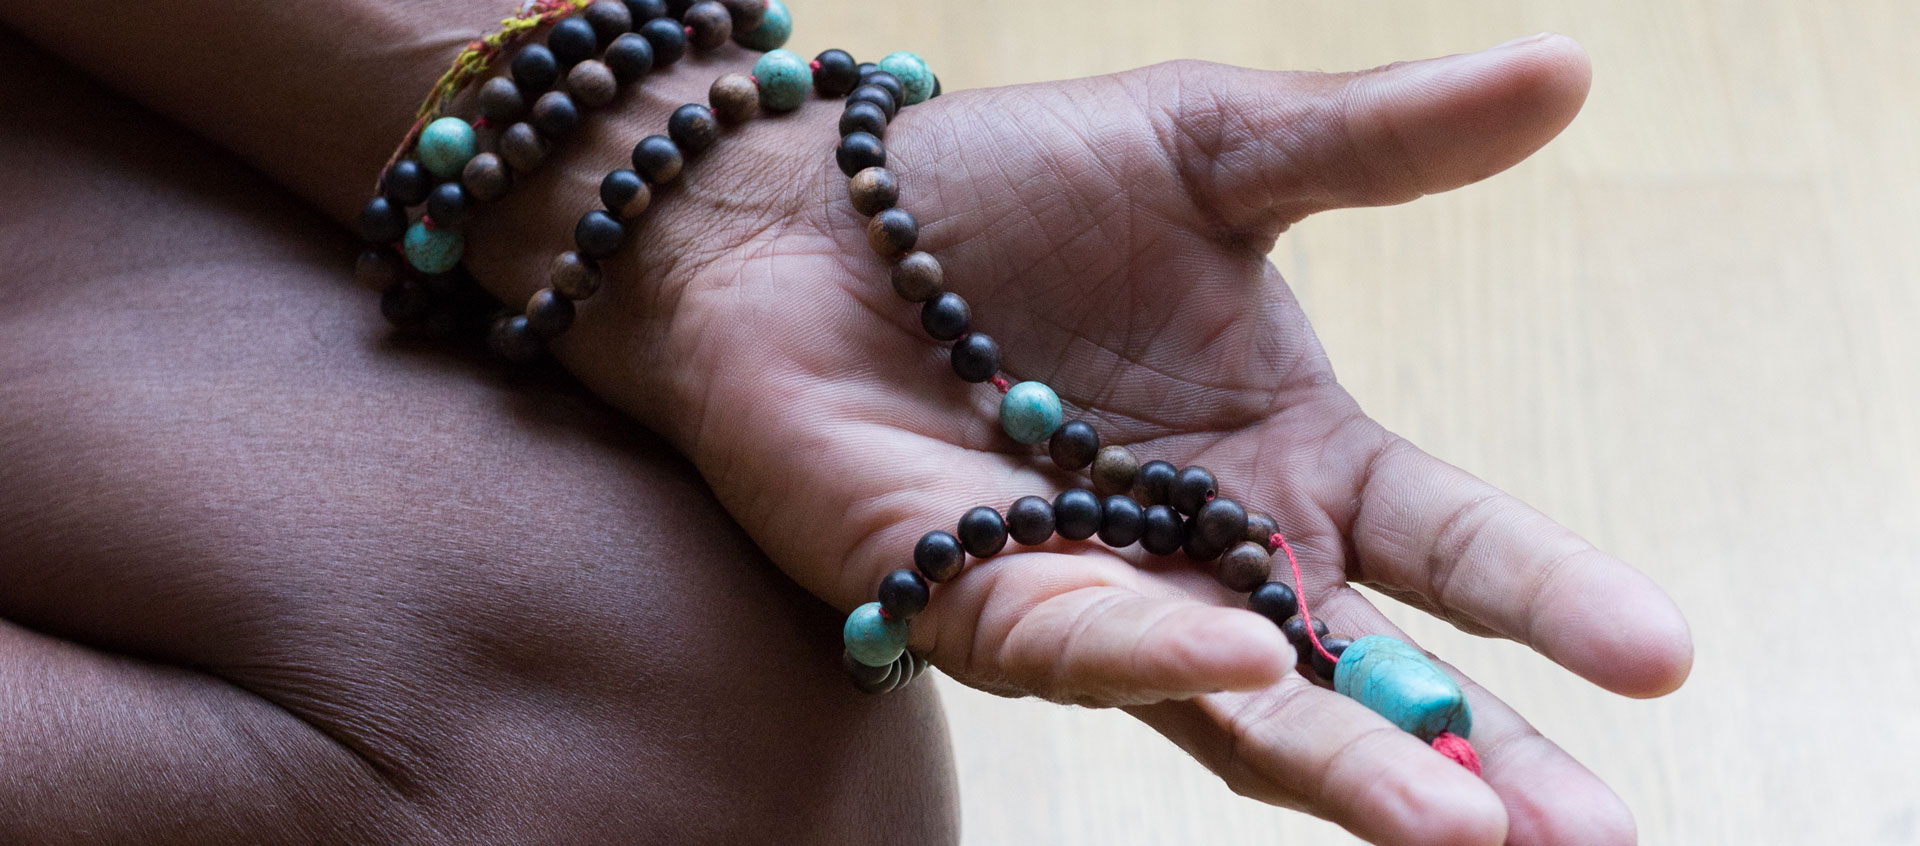 The History, Purpose and Value of Meditation Mala Beads - Balance